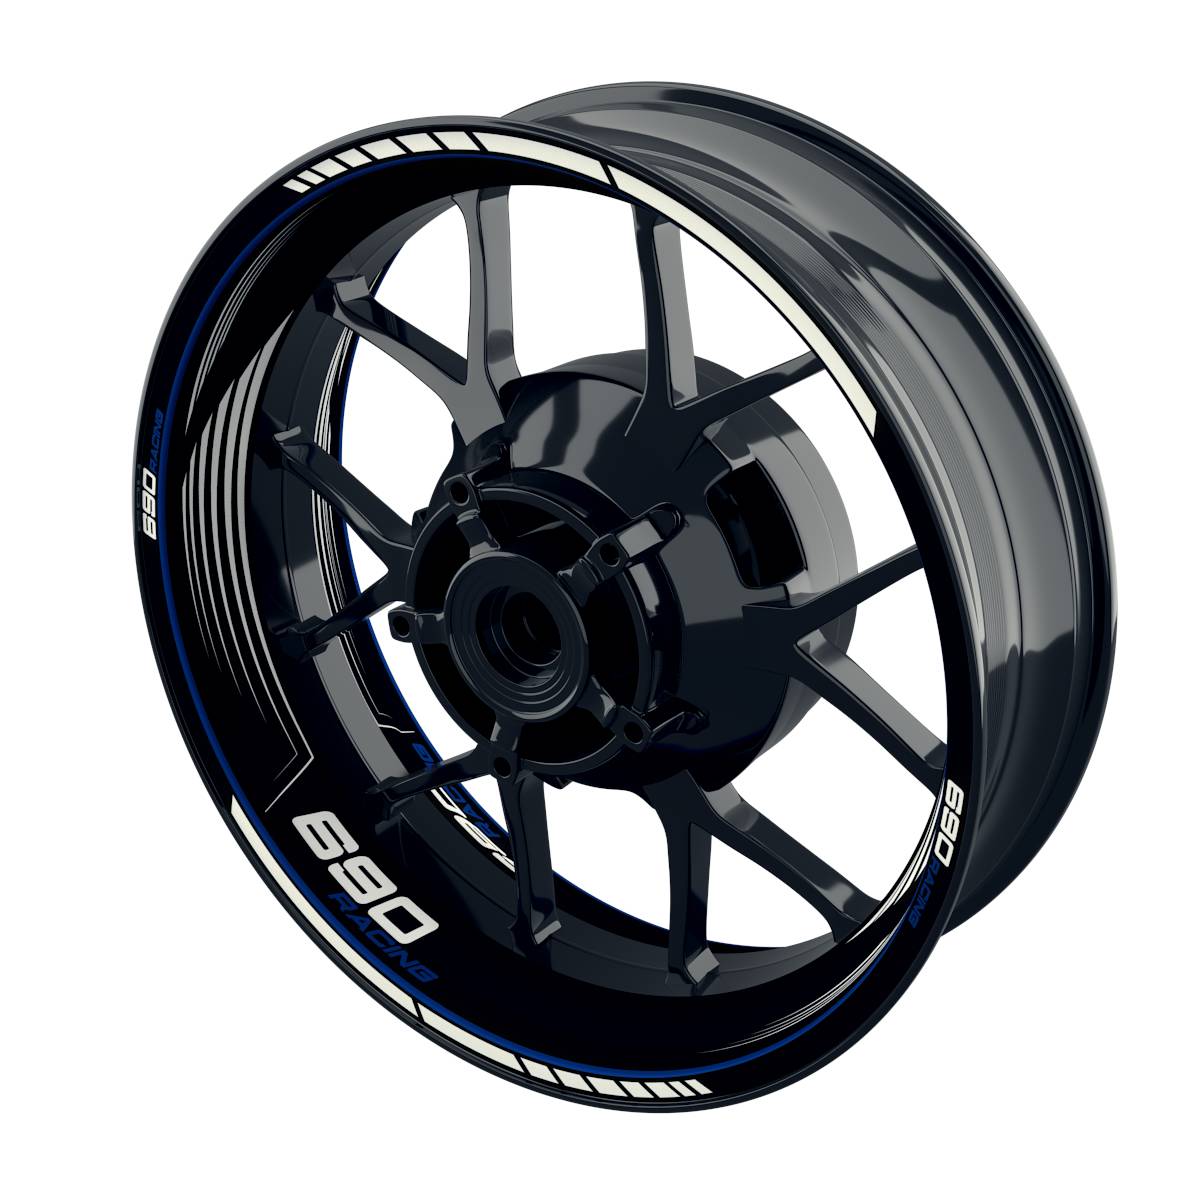 690 Racing Rim Decals SAW Wheelsticker Premium